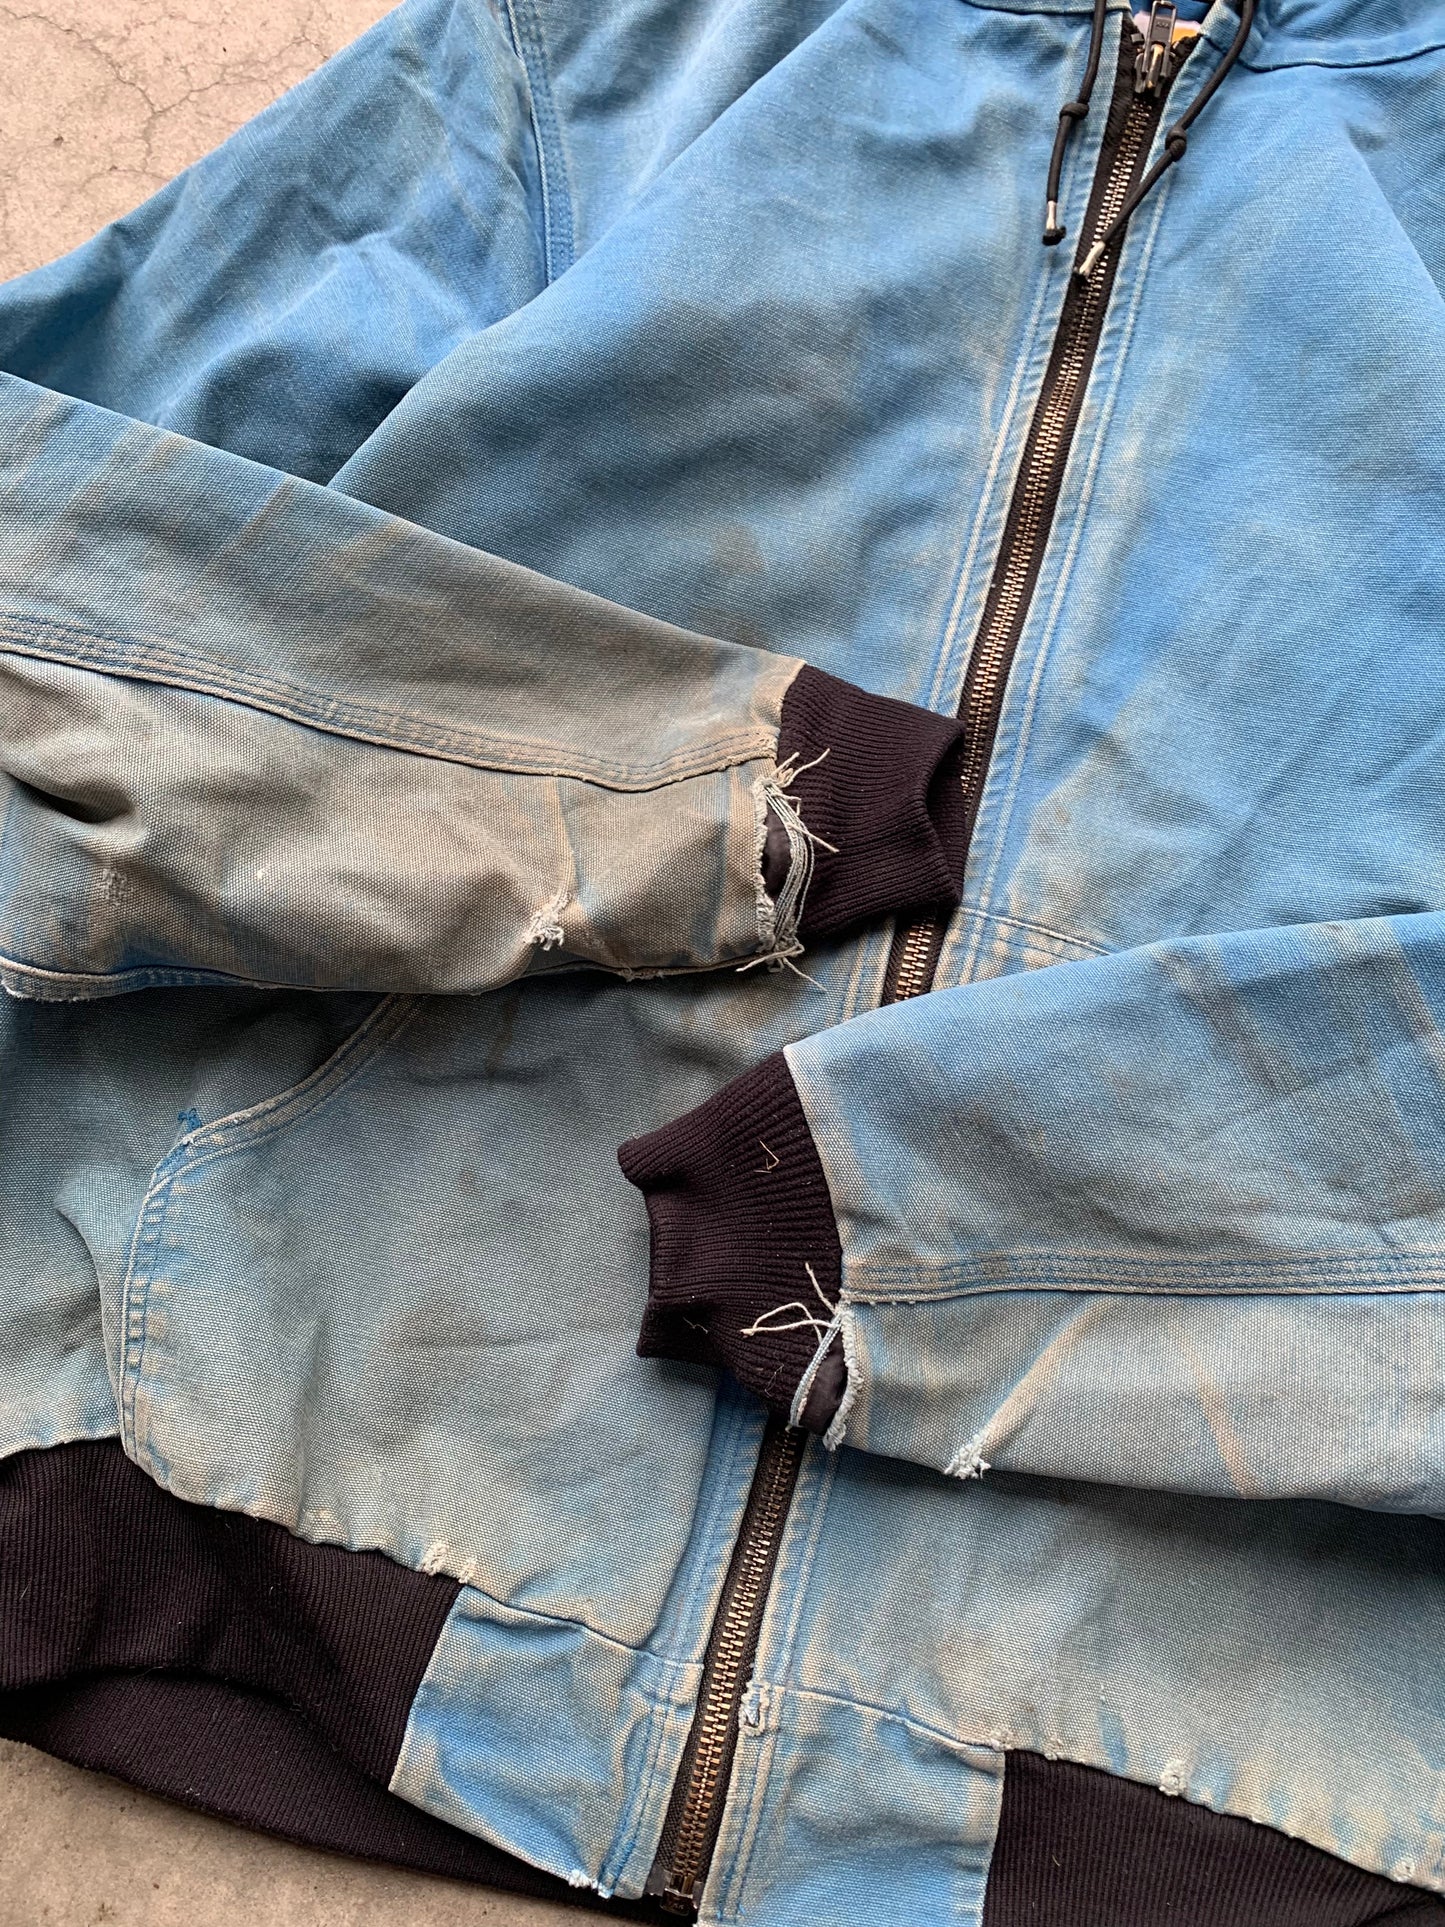 (XL/2X) Vintage Distressed Aqua Blue Carhartt Hooded